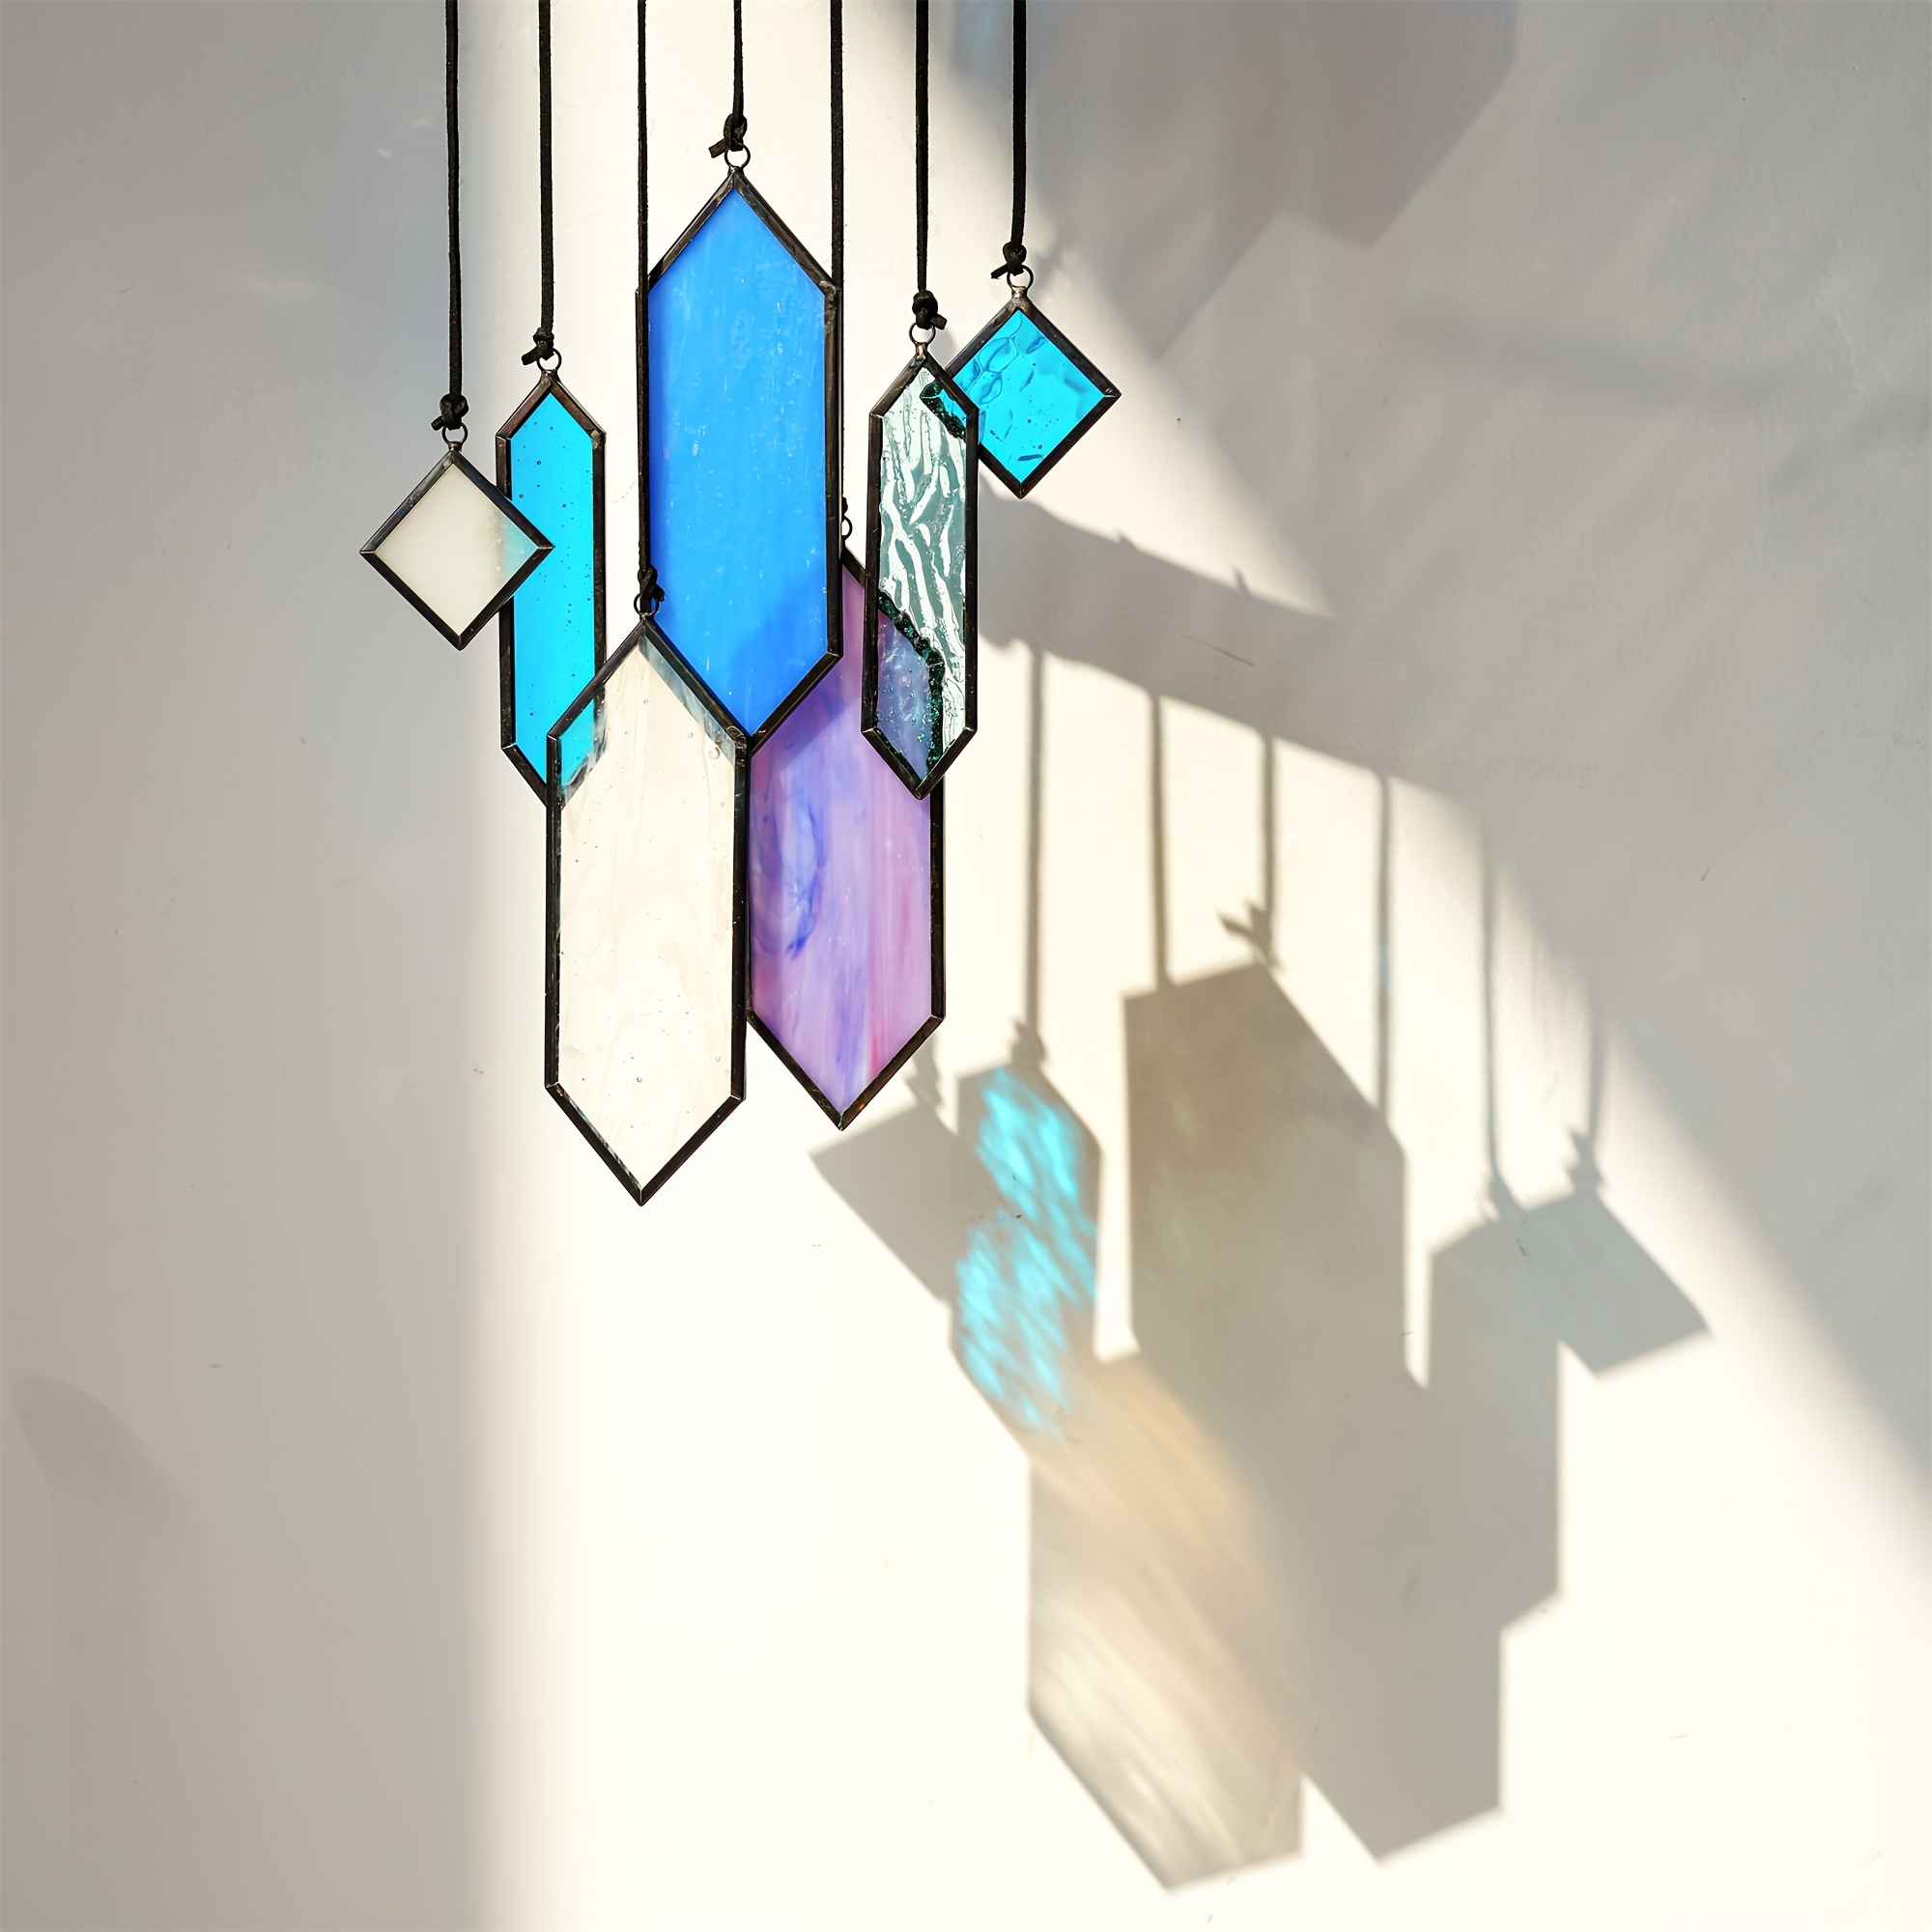 

Handcrafted Blue Stained Glass Suncatchers - 7pcs Earth Tone Window Hanging Set, Modern Wall Art Decor